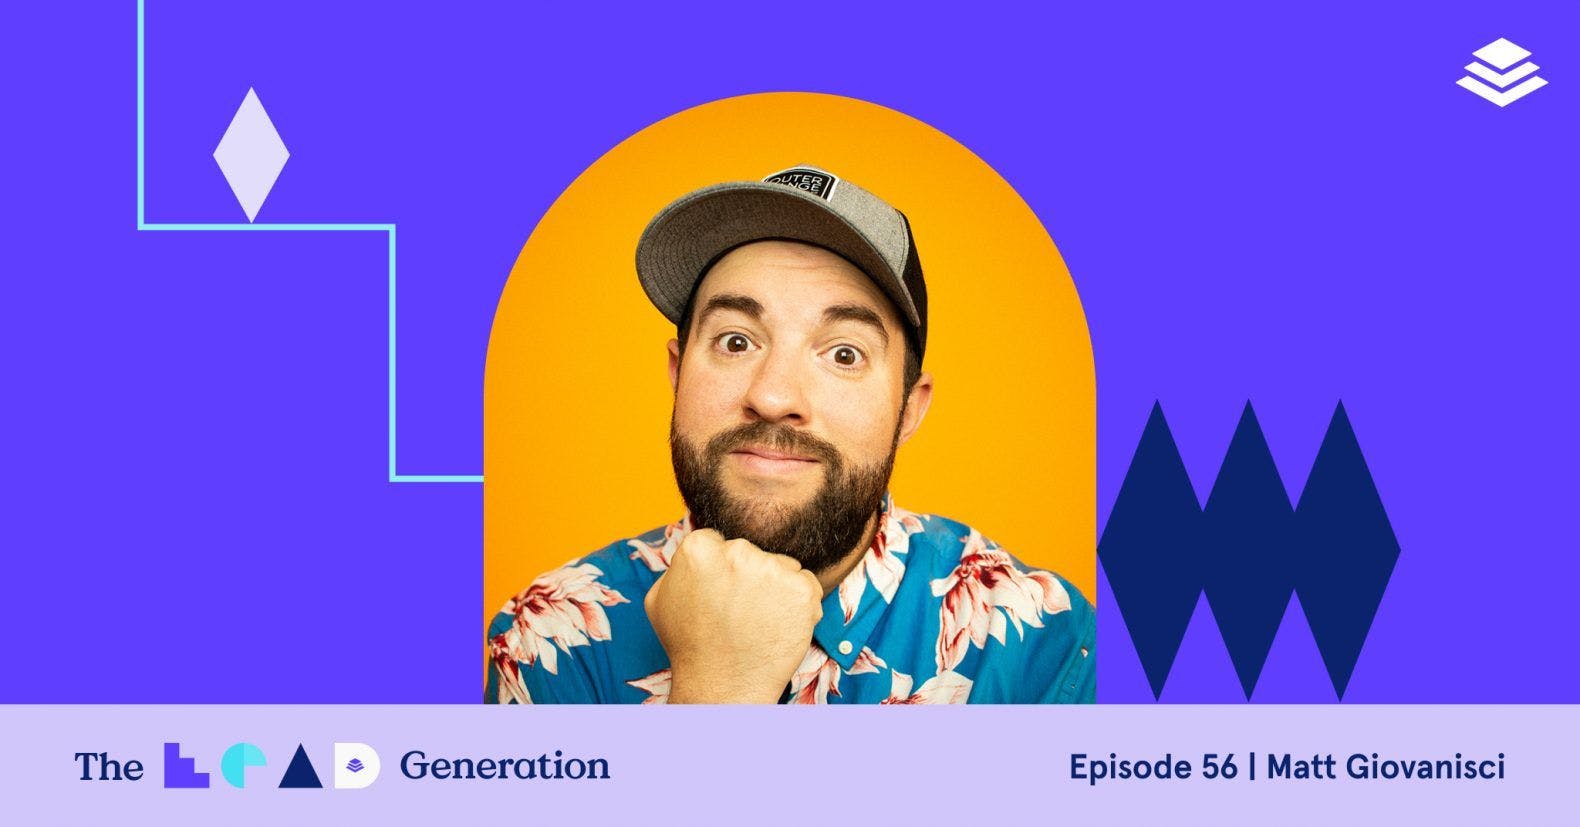 The Lead Generation Podcast Episode 56: Matt Giovanisci